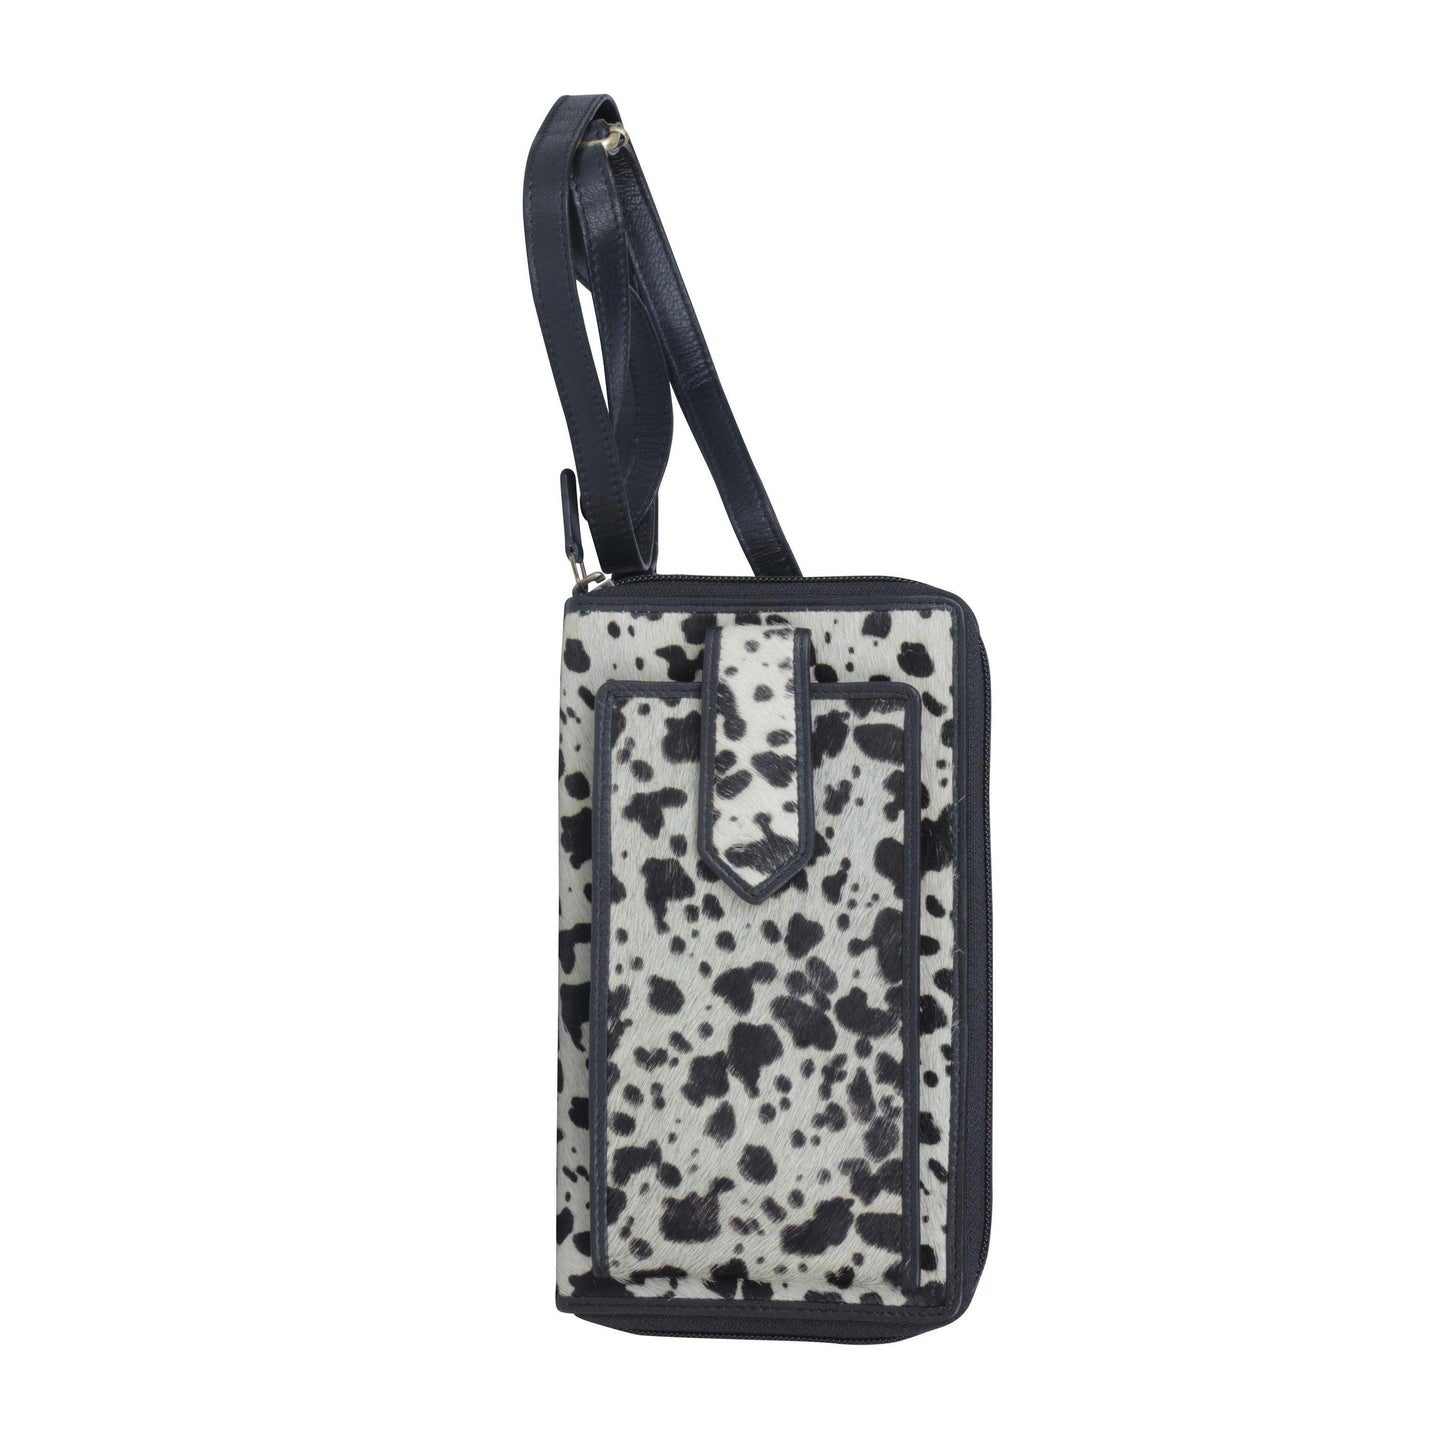 Speckled Phone Holder Wallet from Brooklyn Bag at Moosestrum.com